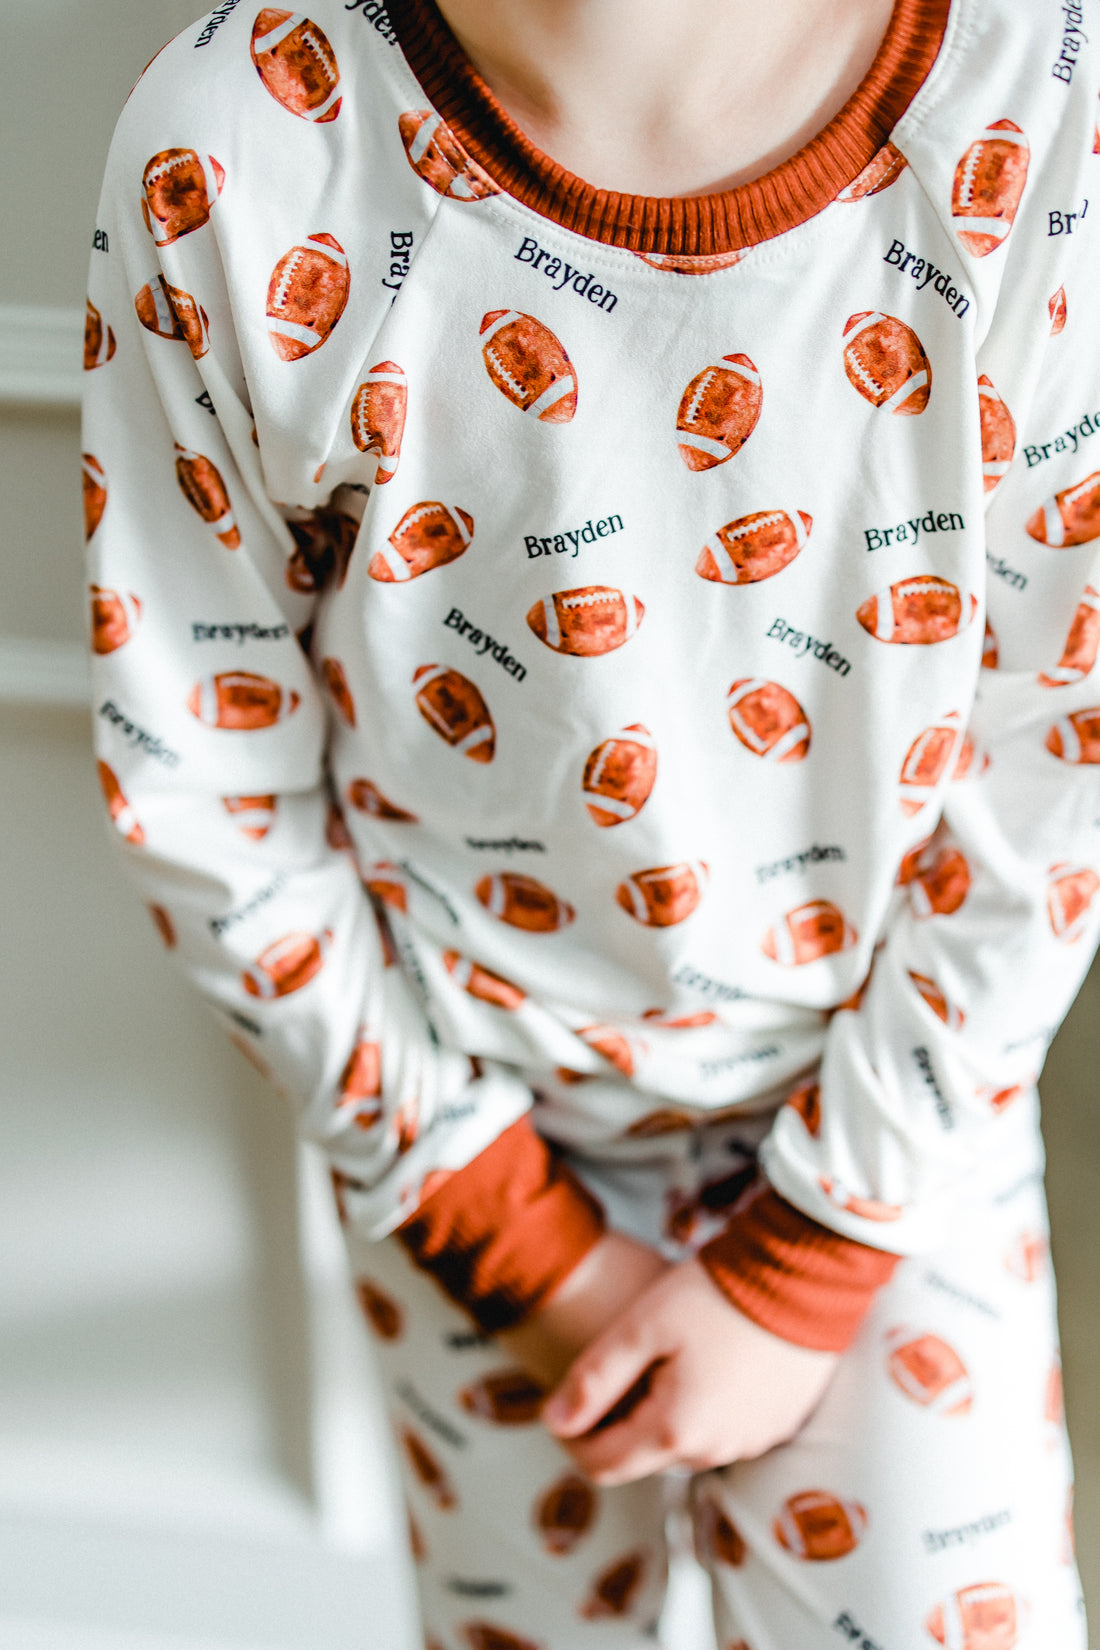 Football Pajamas Size 3T-12 (Boy and Girl Options)